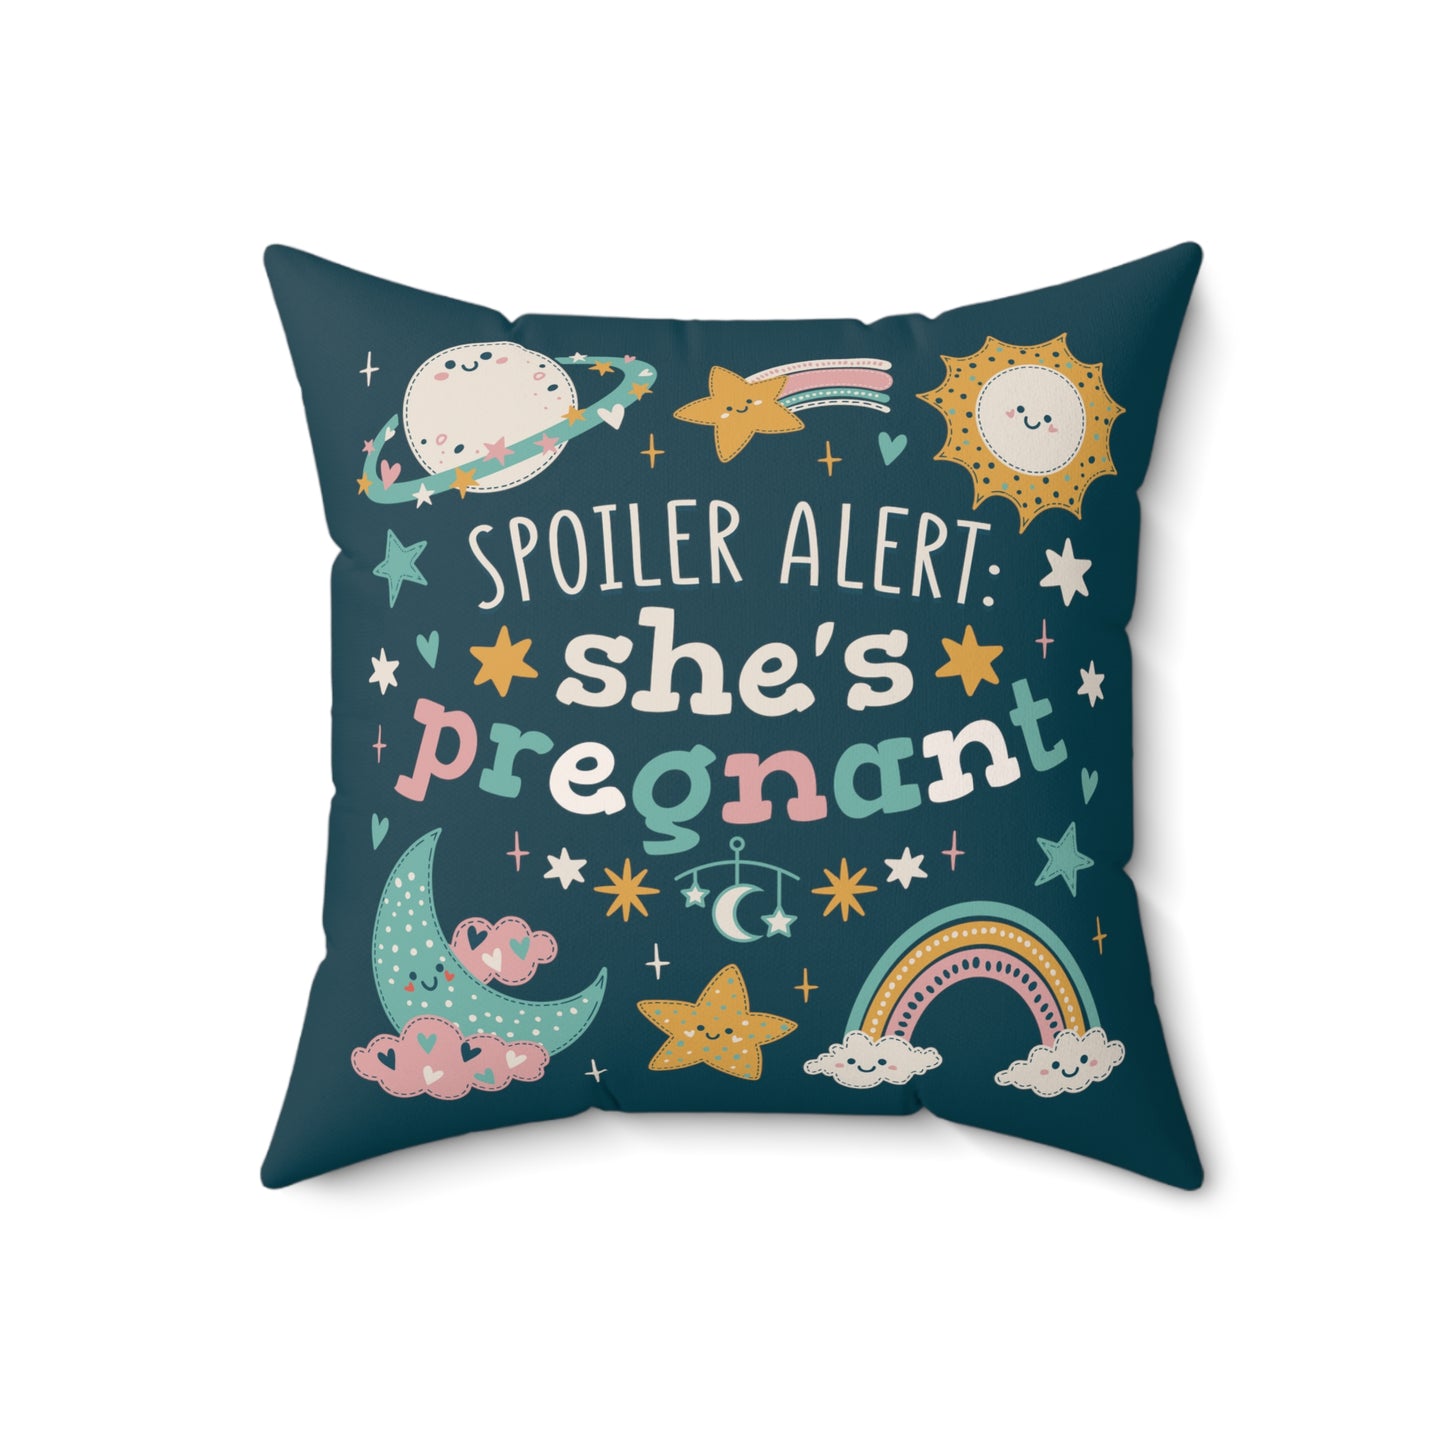 Spoiler Alert - She's Pregnant Square Pillow